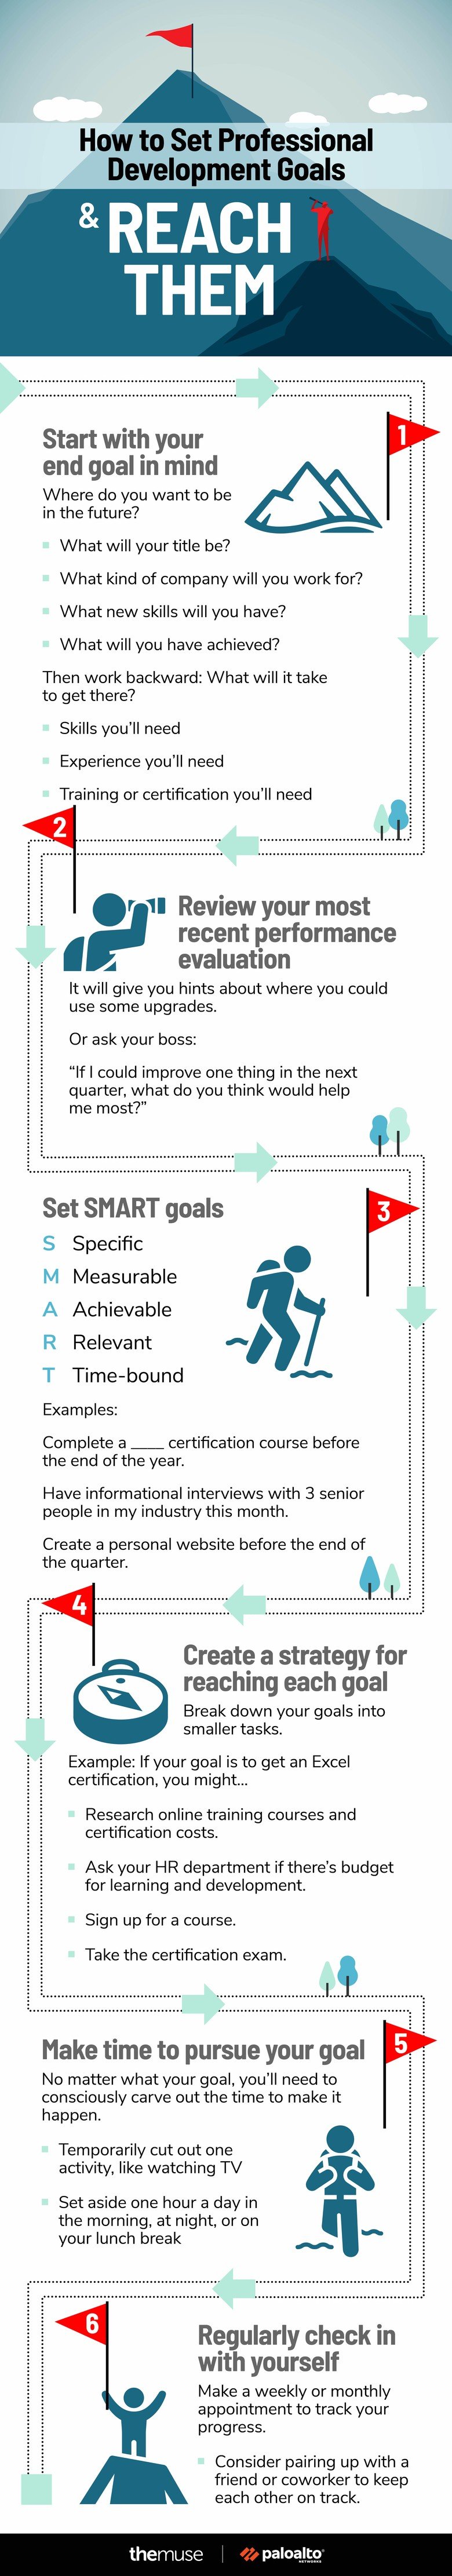 infographic illustrating 6 steps for setting professional development goals